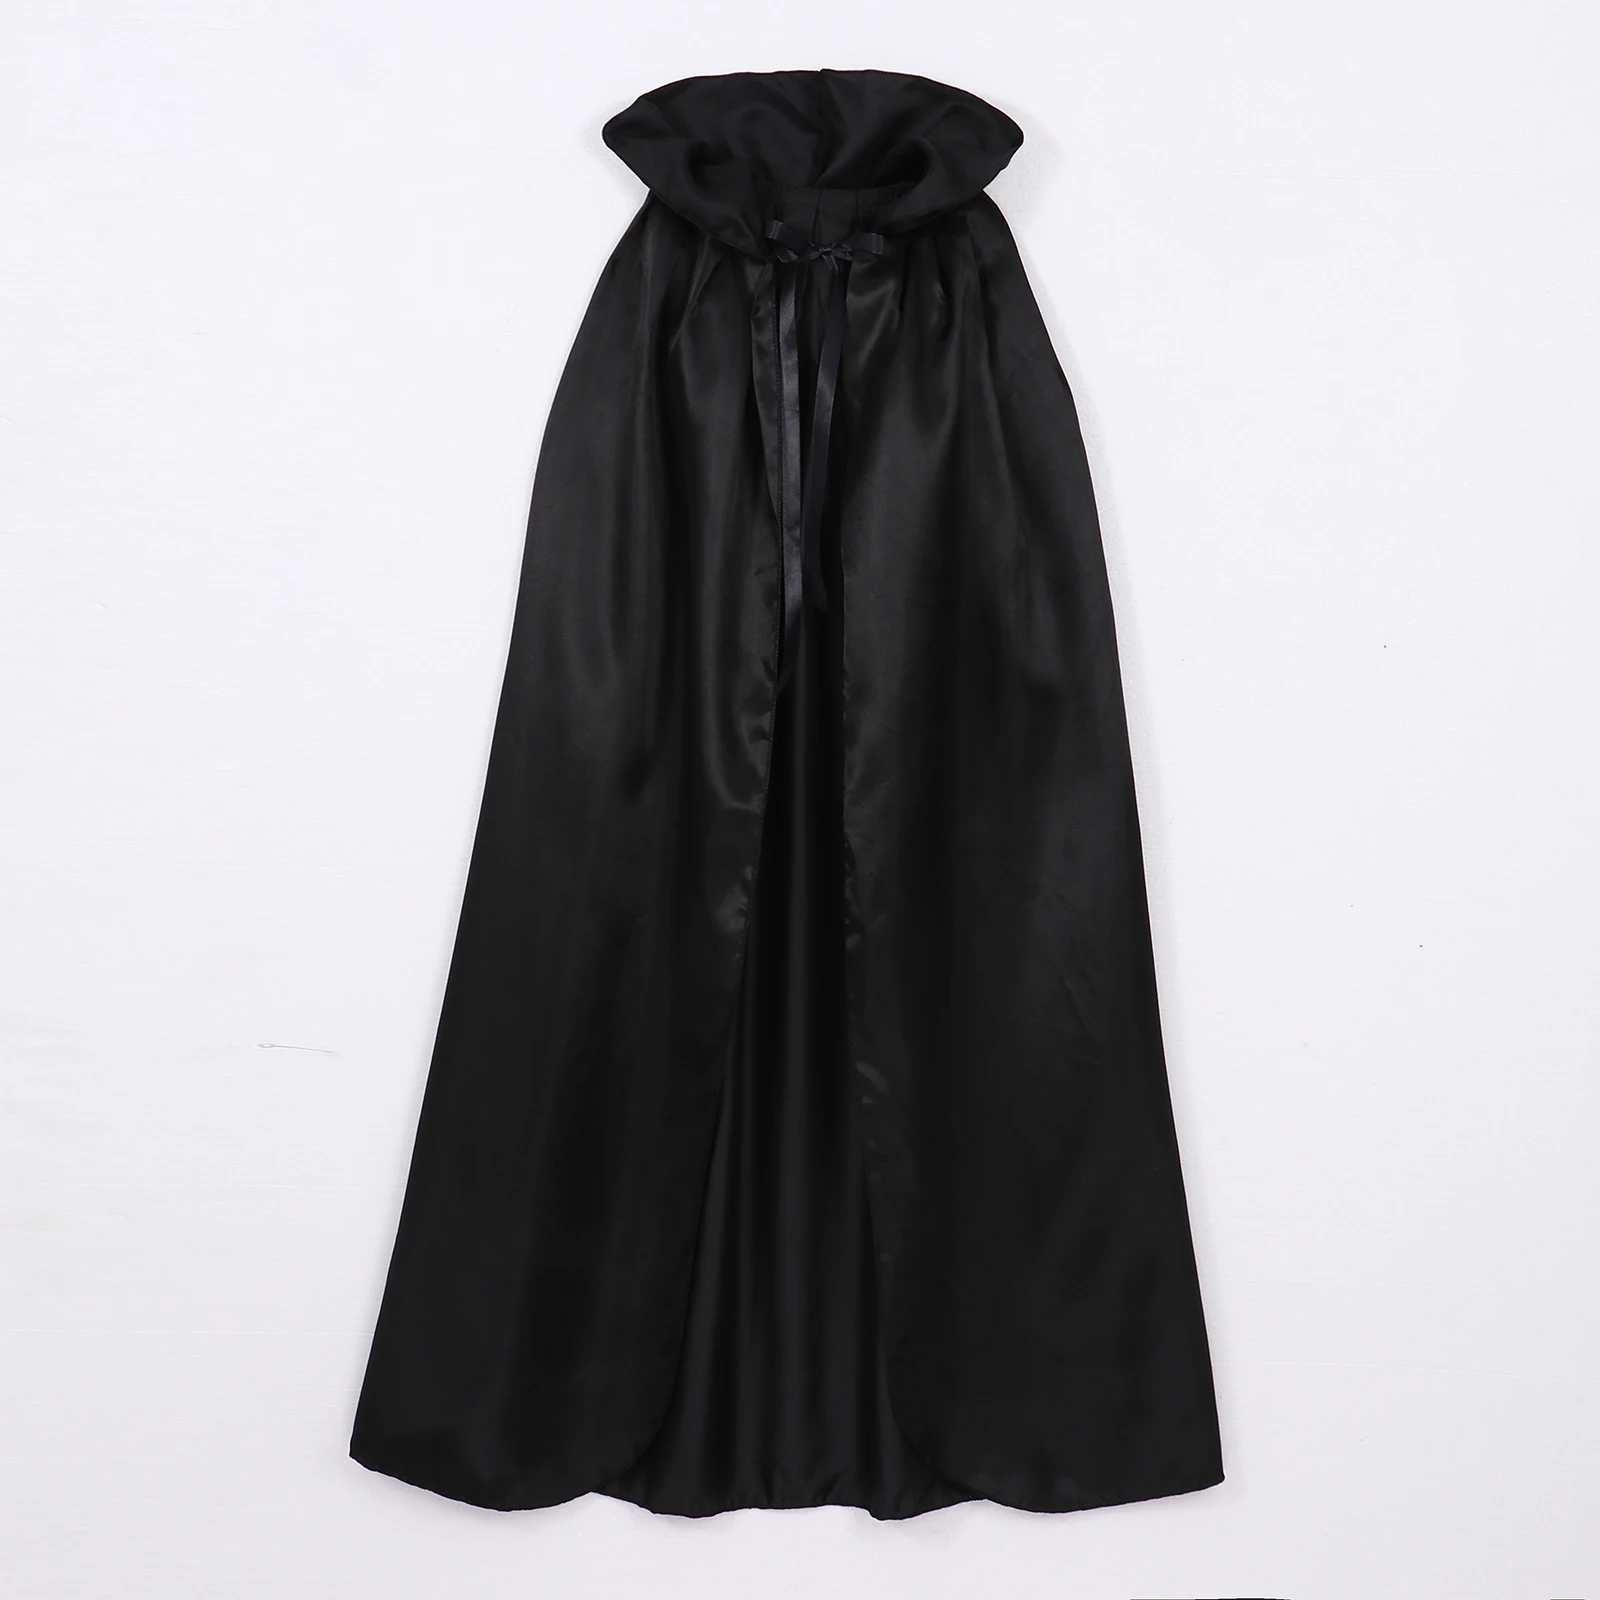 Details about   Adult Unisex Halloween Wizard Costumes Cloak Hood Cape Fancy Dress Cosplay Coat 